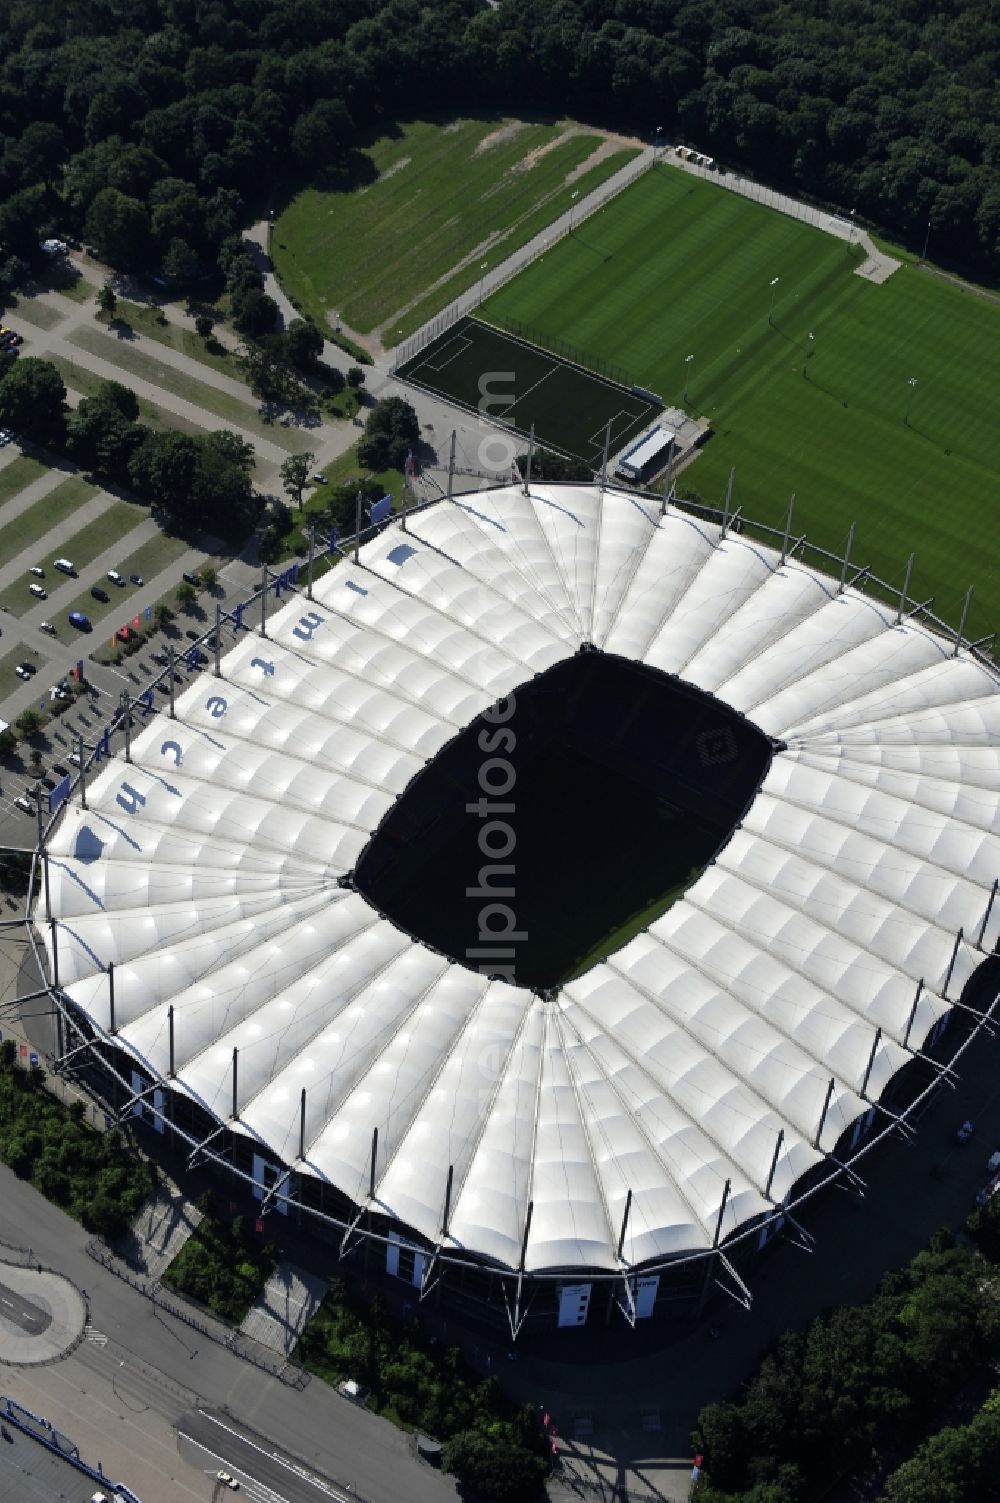 Aerial image Hamburg - The stadium Volksparkstadion is the home ground of German Bundesliga club HSV